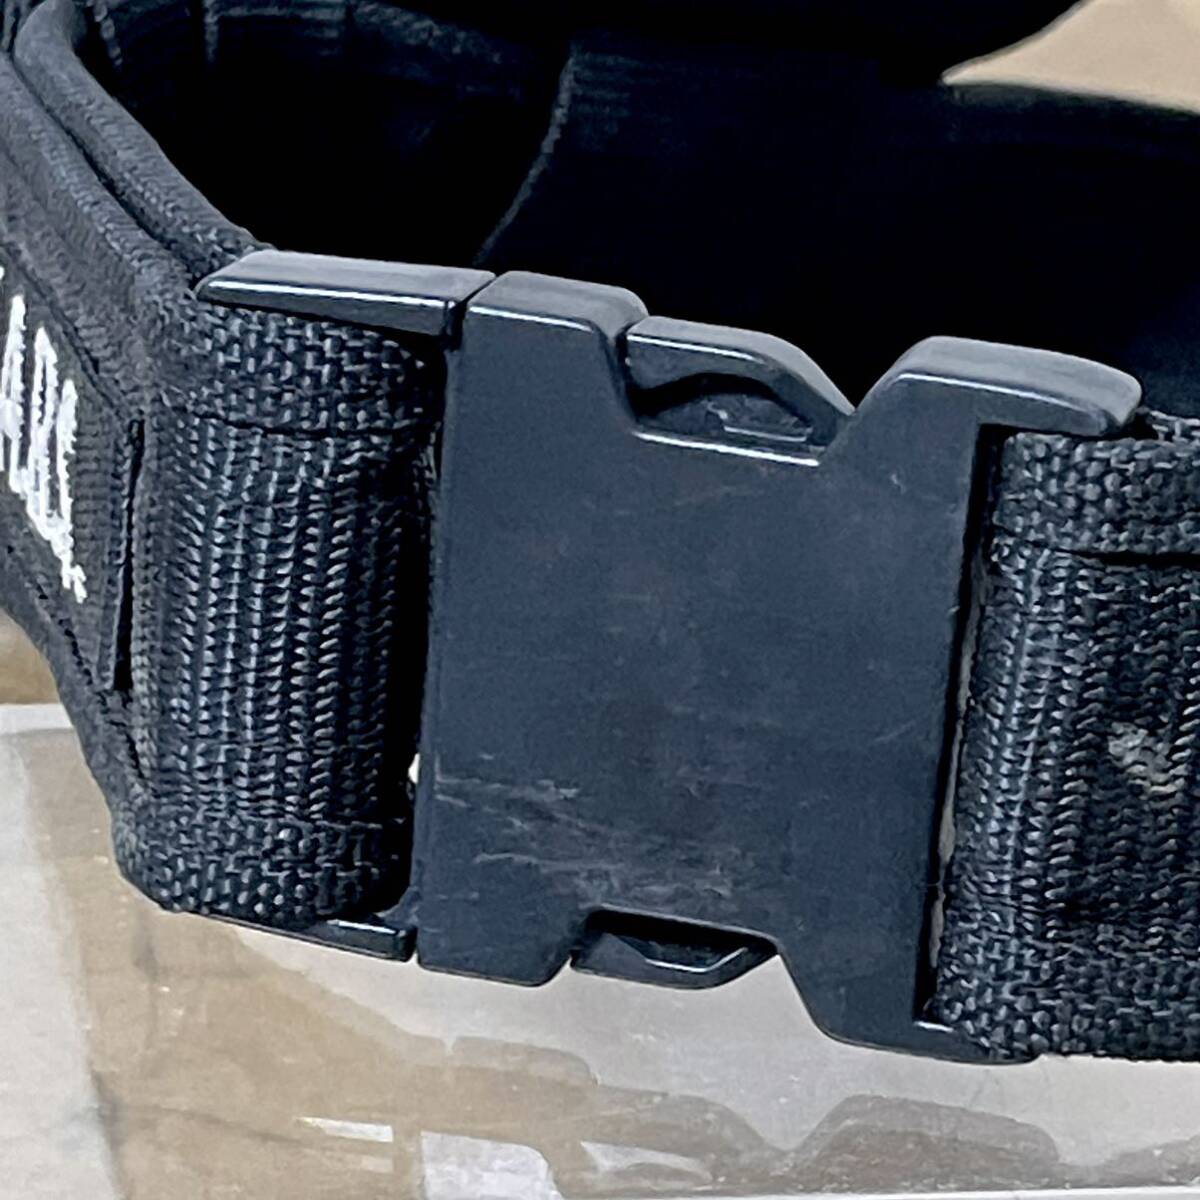  airsoft / personal equipment gun belt / cartridge belt BIO HAZARD/ Vaio hazard raccoon City / raccoon Police S.T.A.R.S/RACCOON POLICE DEP